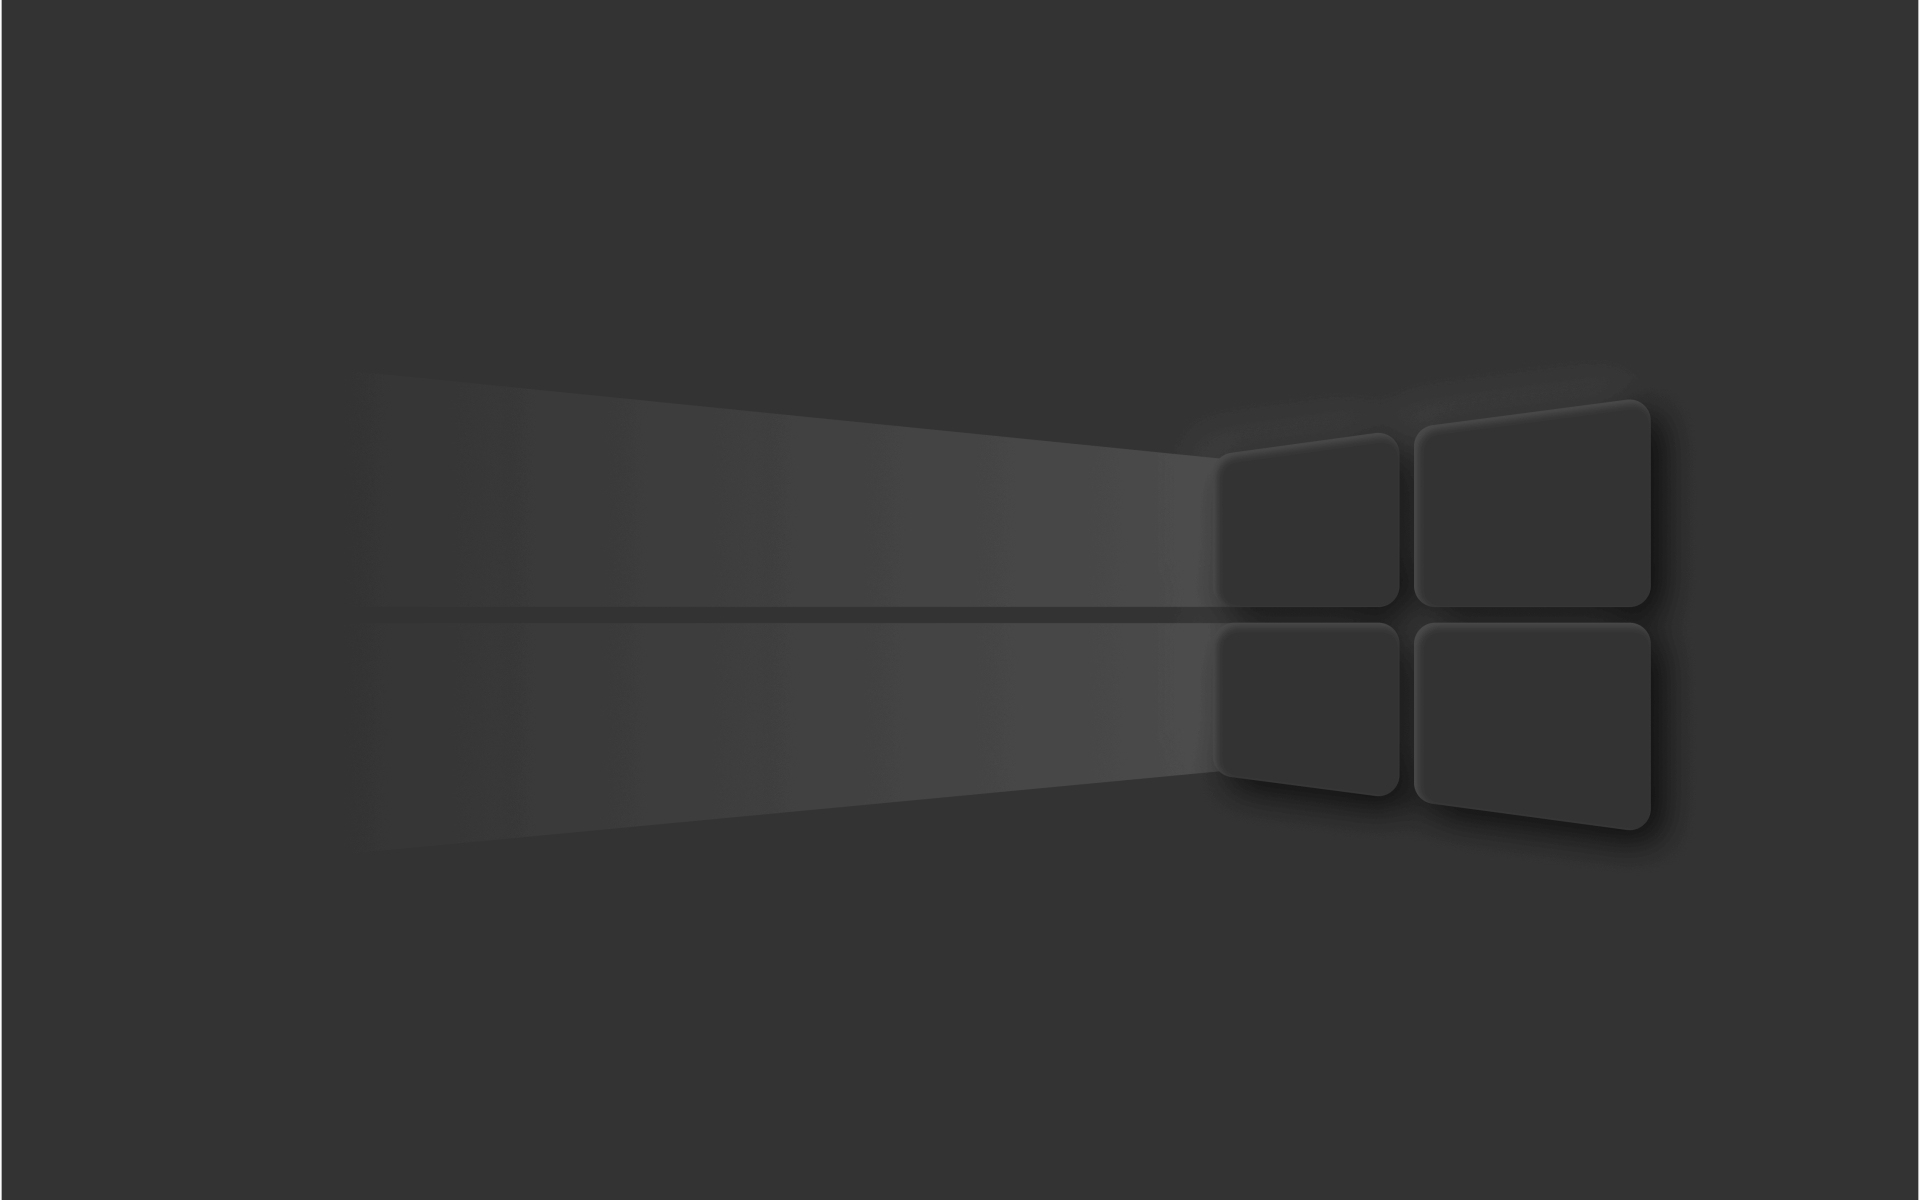 1920x1200 Windows 10 Dark Mode Logo 1200p Wallpaper Hd Hi Tech 4k